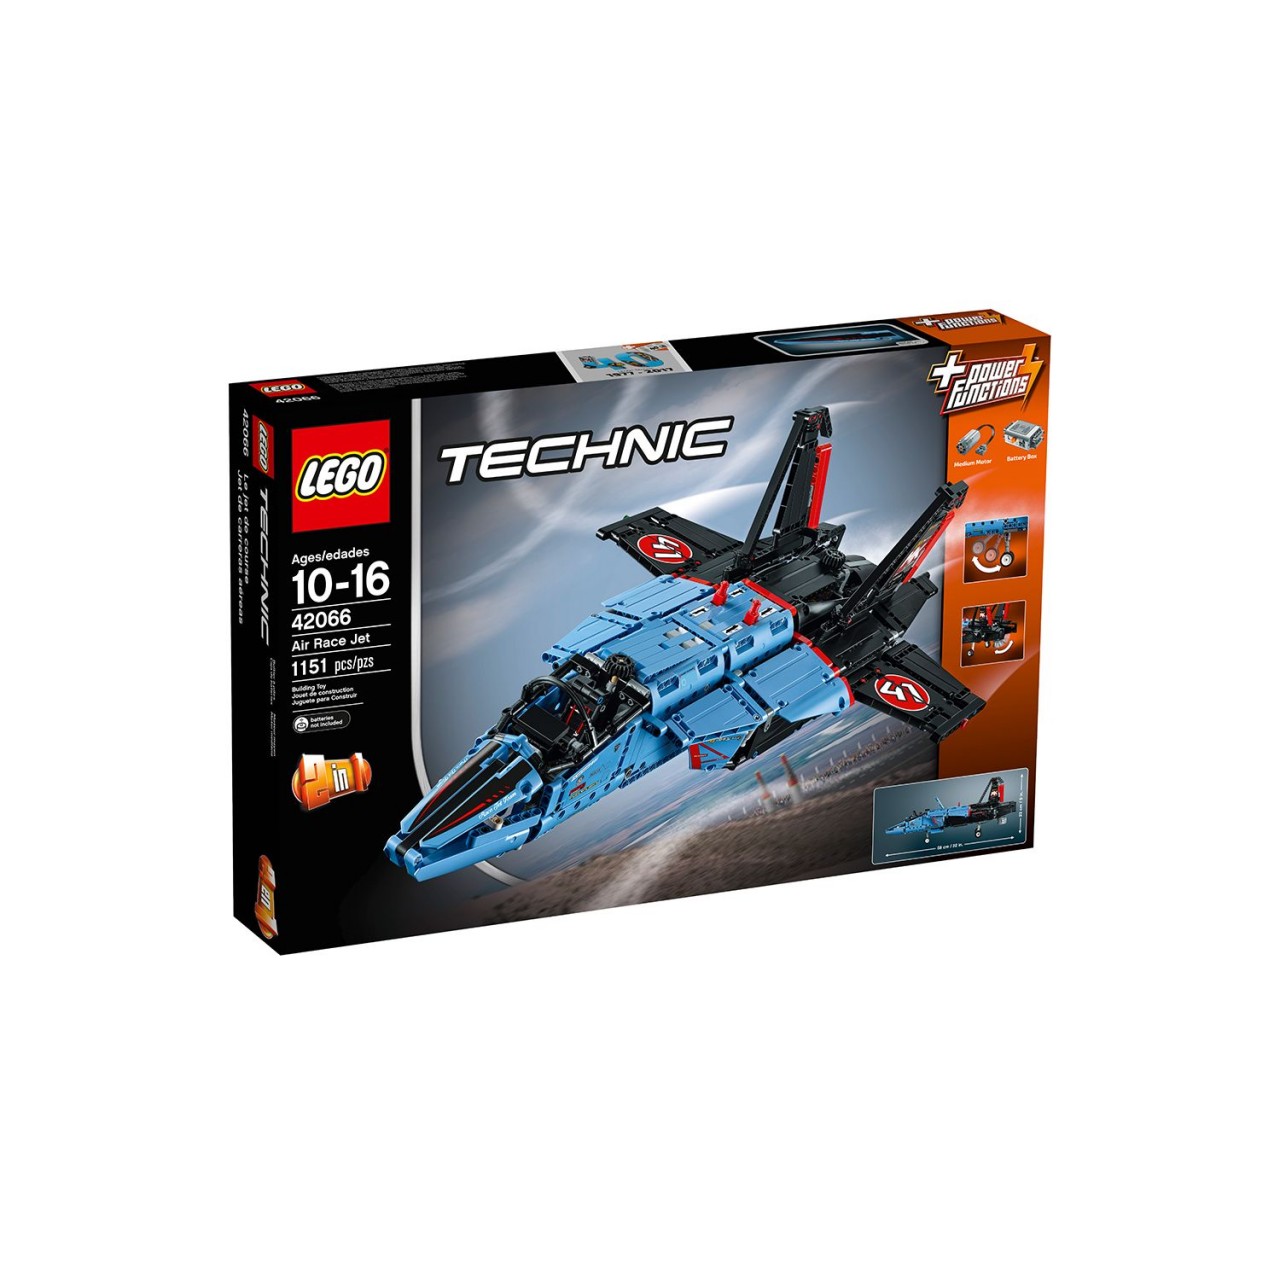 LEGO TECHNIC 42066 Air Race Jet